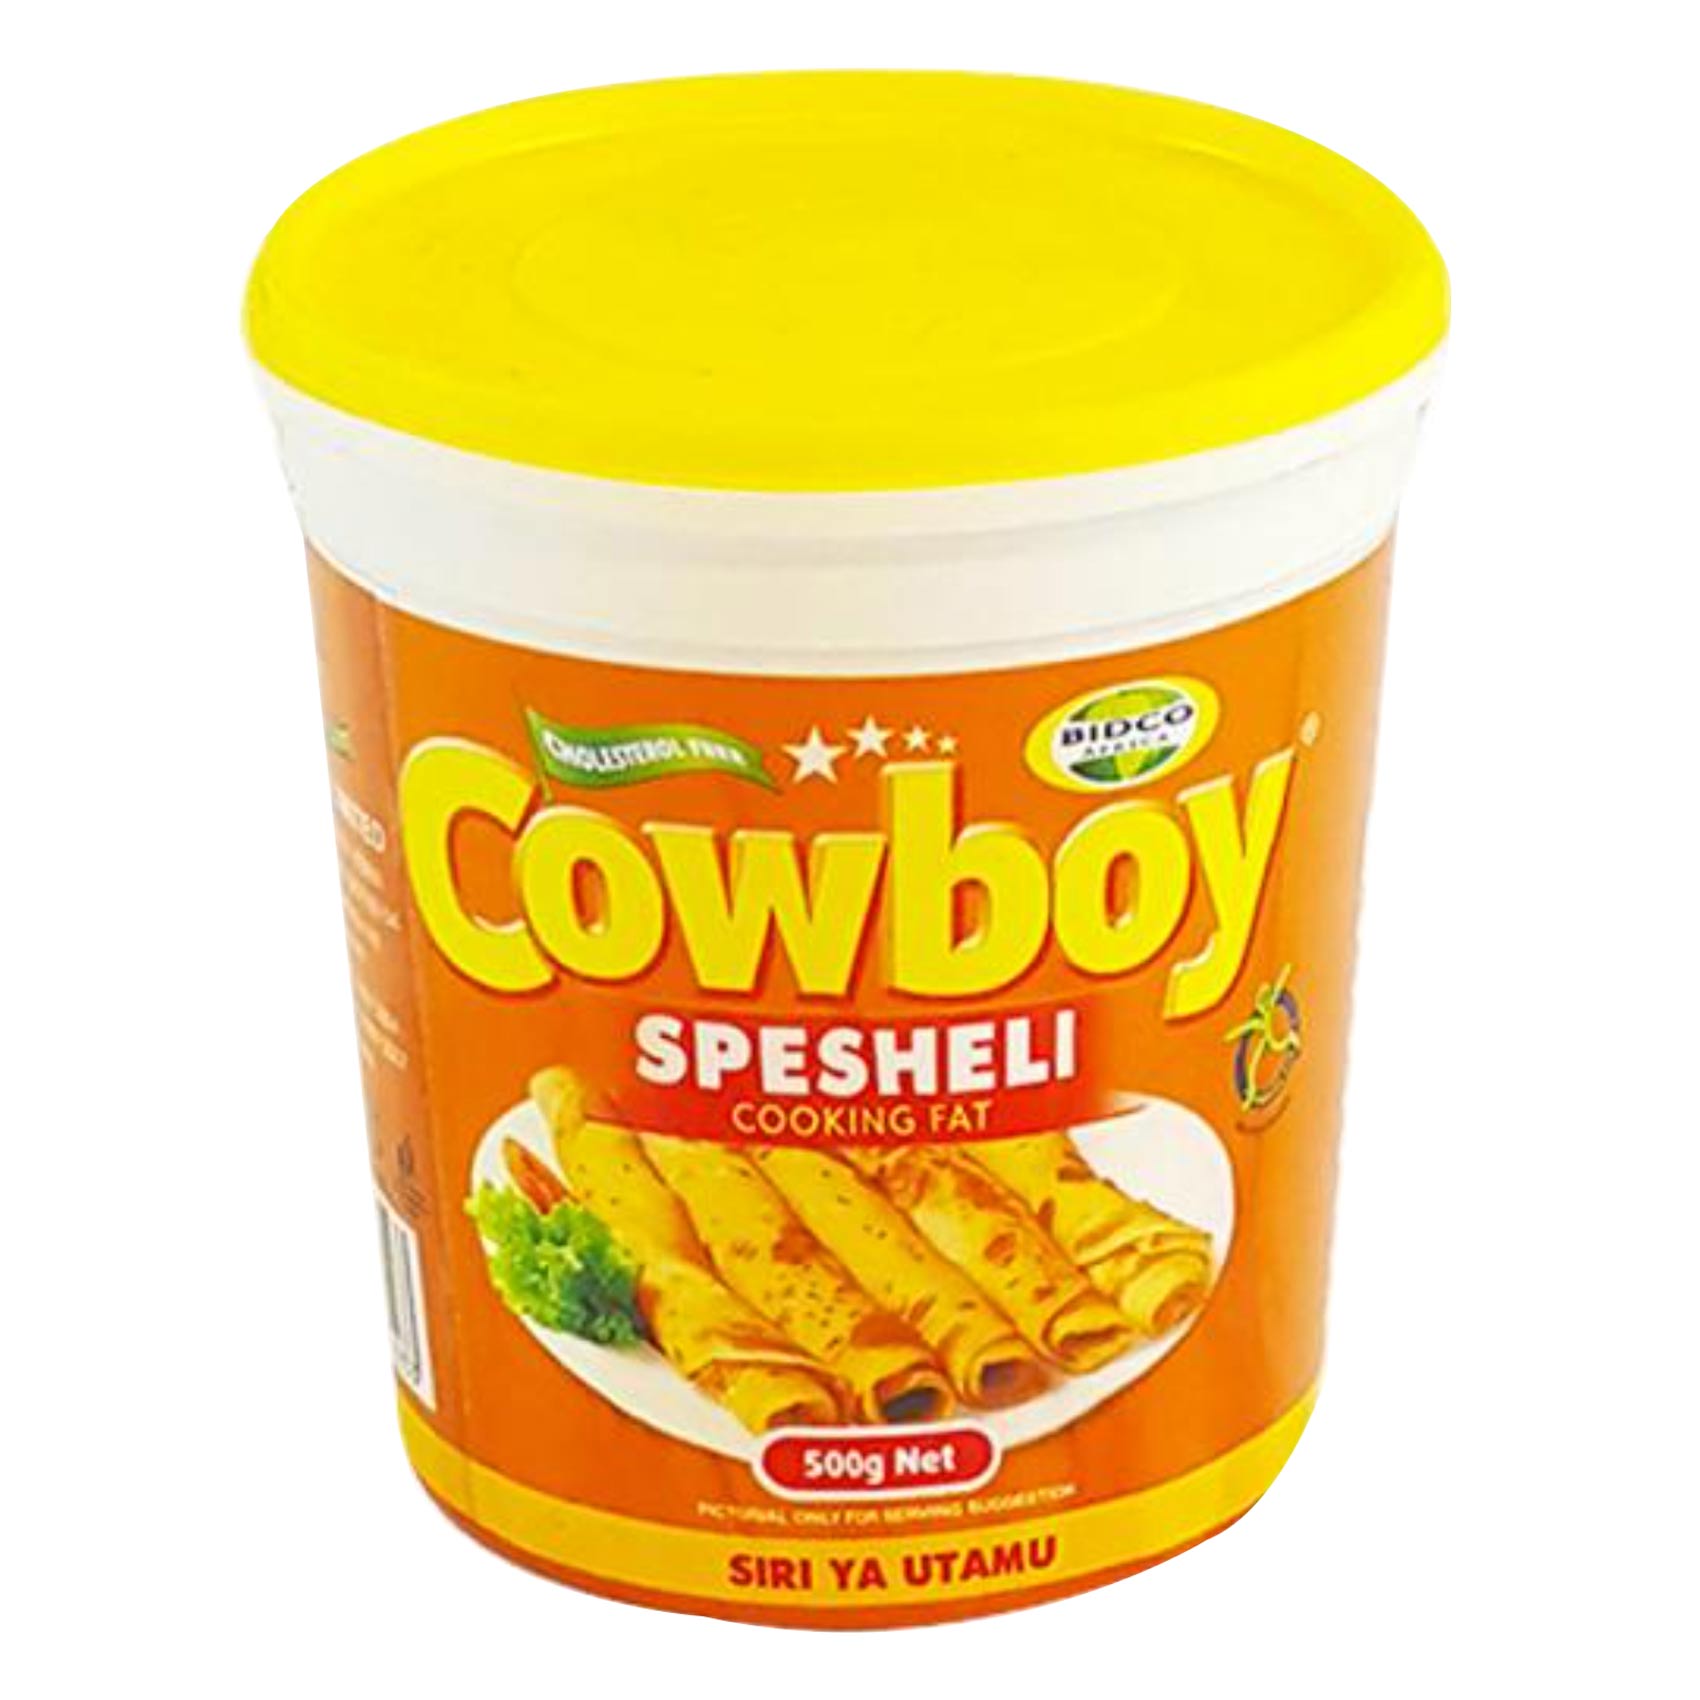 Cowboy Spesheli Cooking Fat 500g